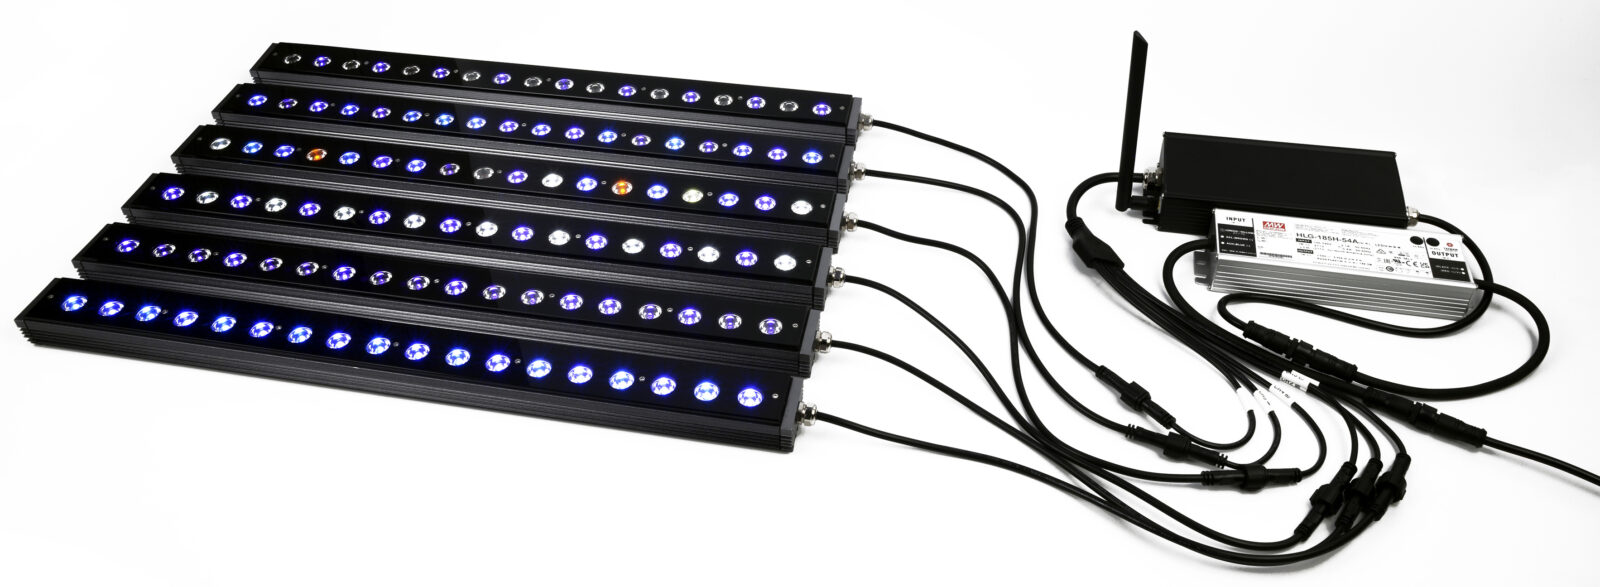 Osix smart controller 6 Or3 reef aquarium LED bars.